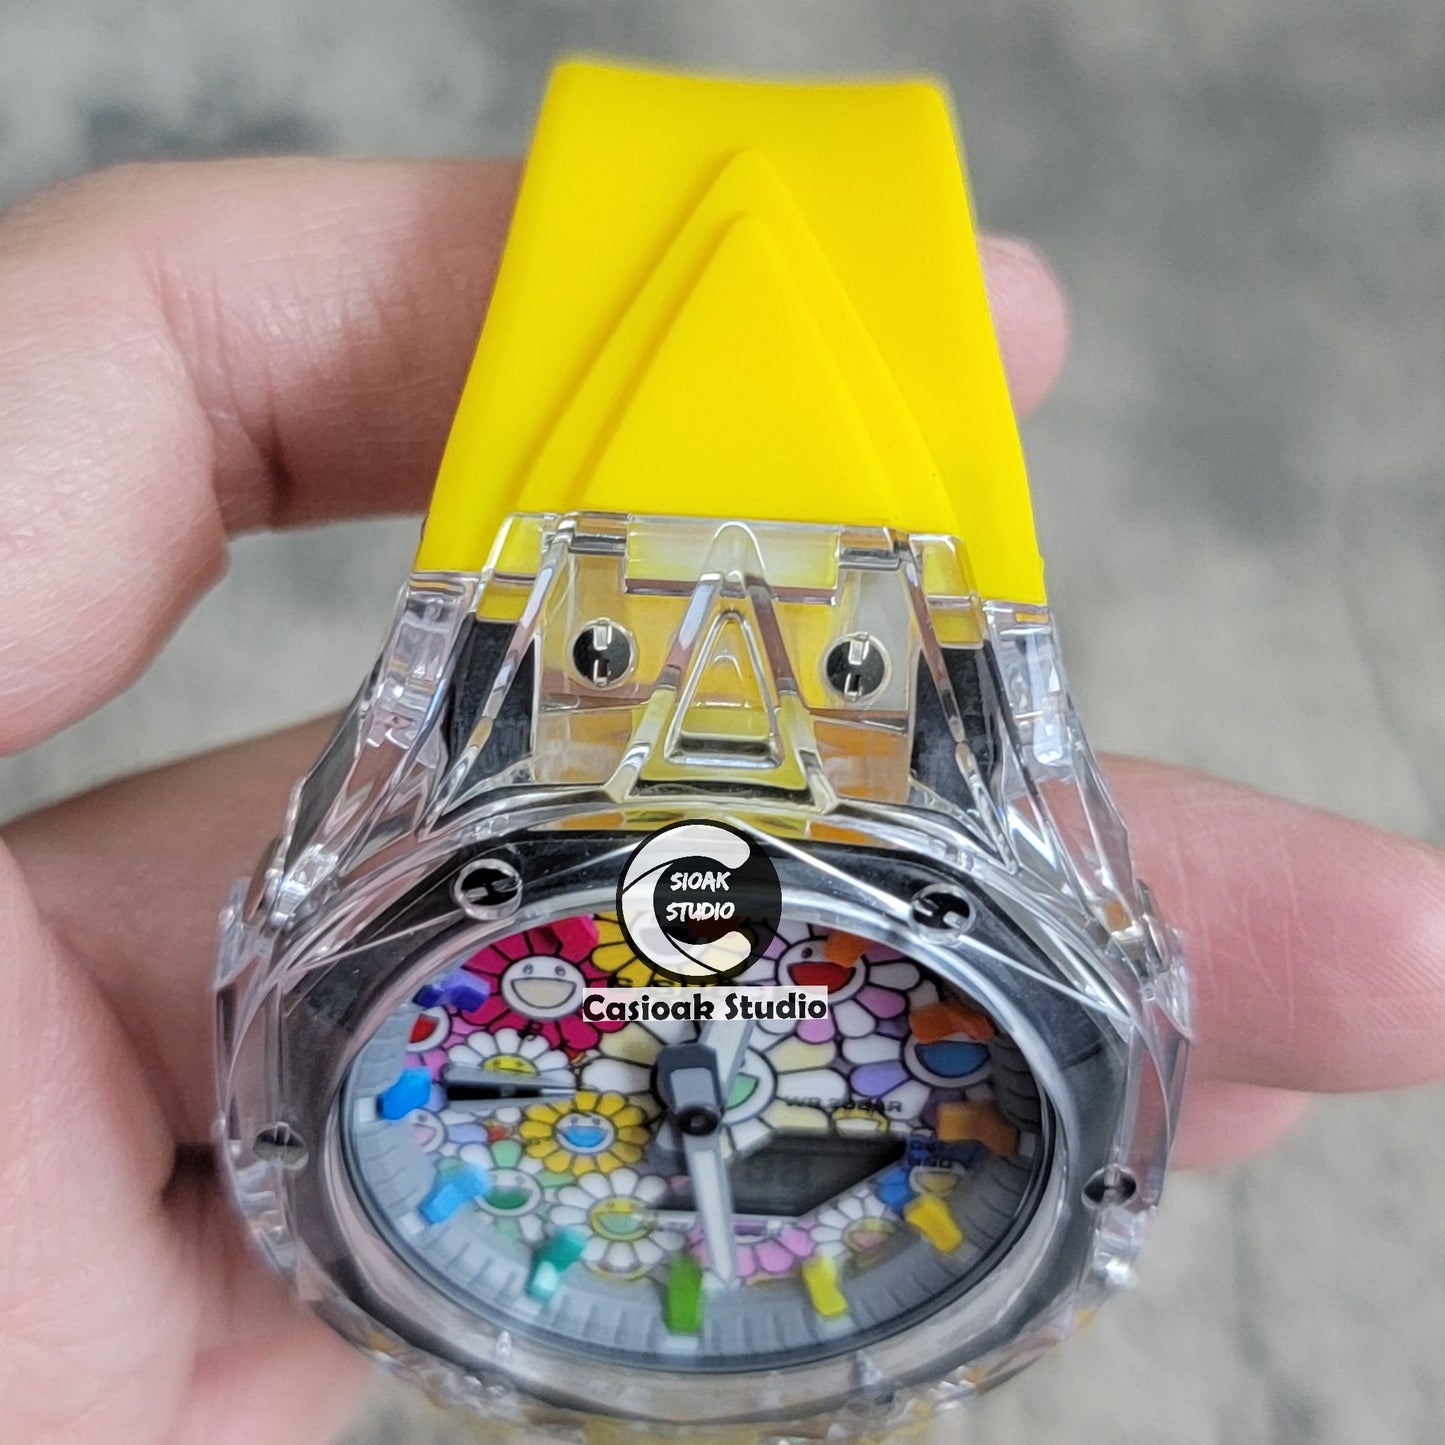 Casioak Mod Transparent Case Yellow Strap Gray Rainbow Time Mark Takashi Murakami Dial 44mm - Casioak Studio